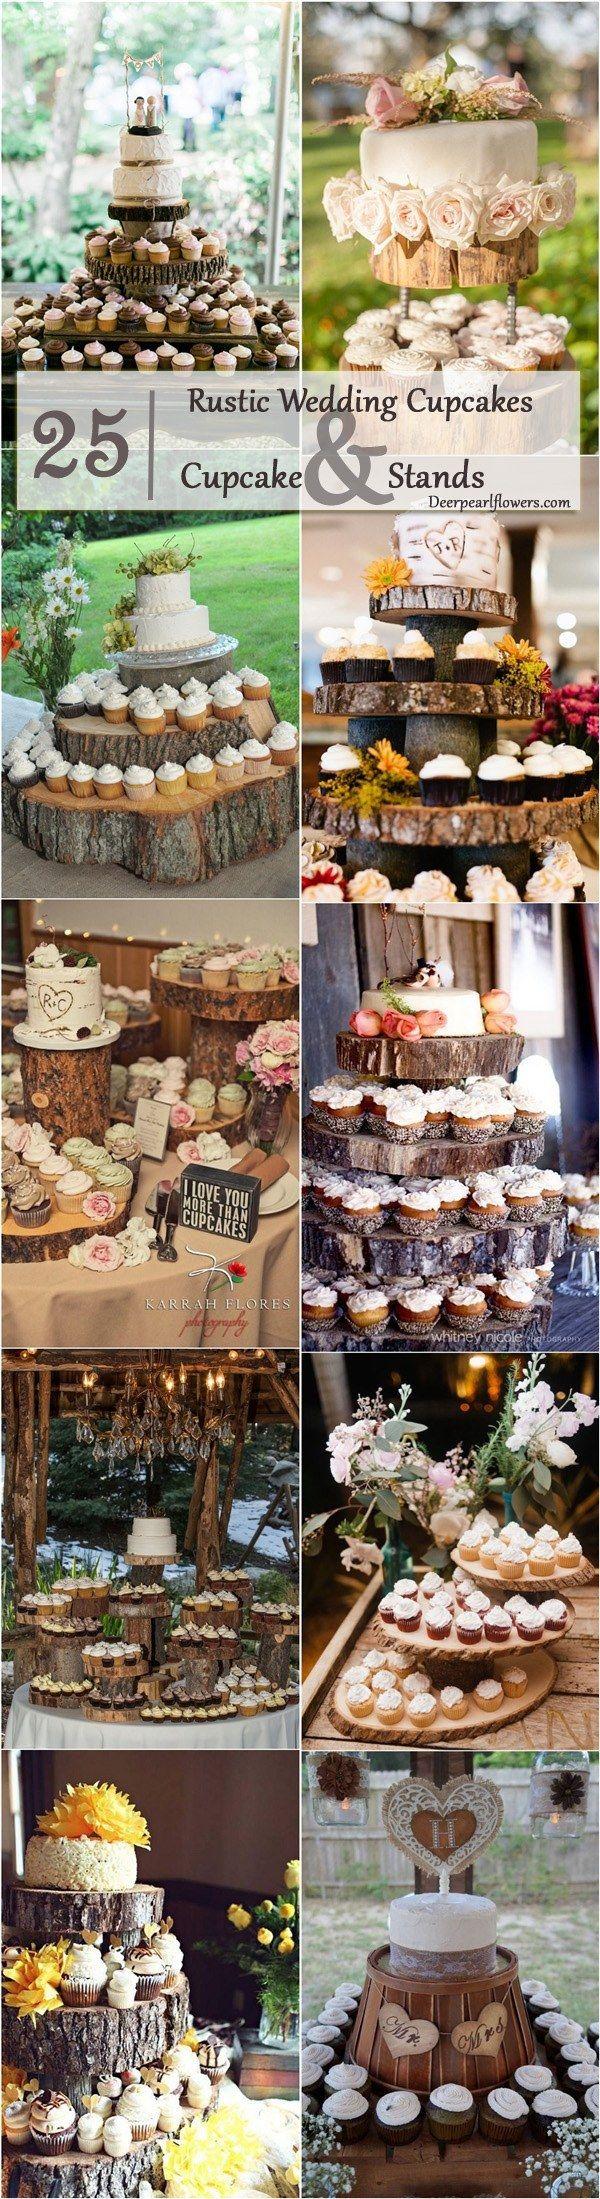 Hochzeit - 25 Amazing Rustic Wedding Cupcakes & Stands